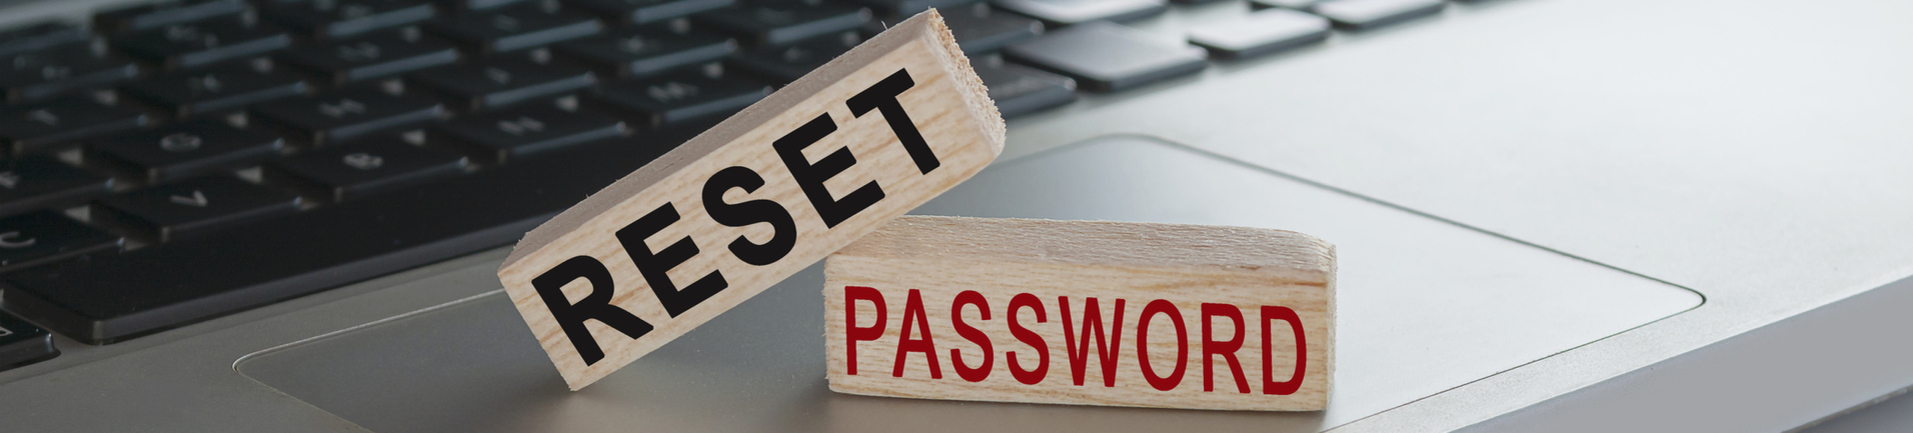 Reset password image